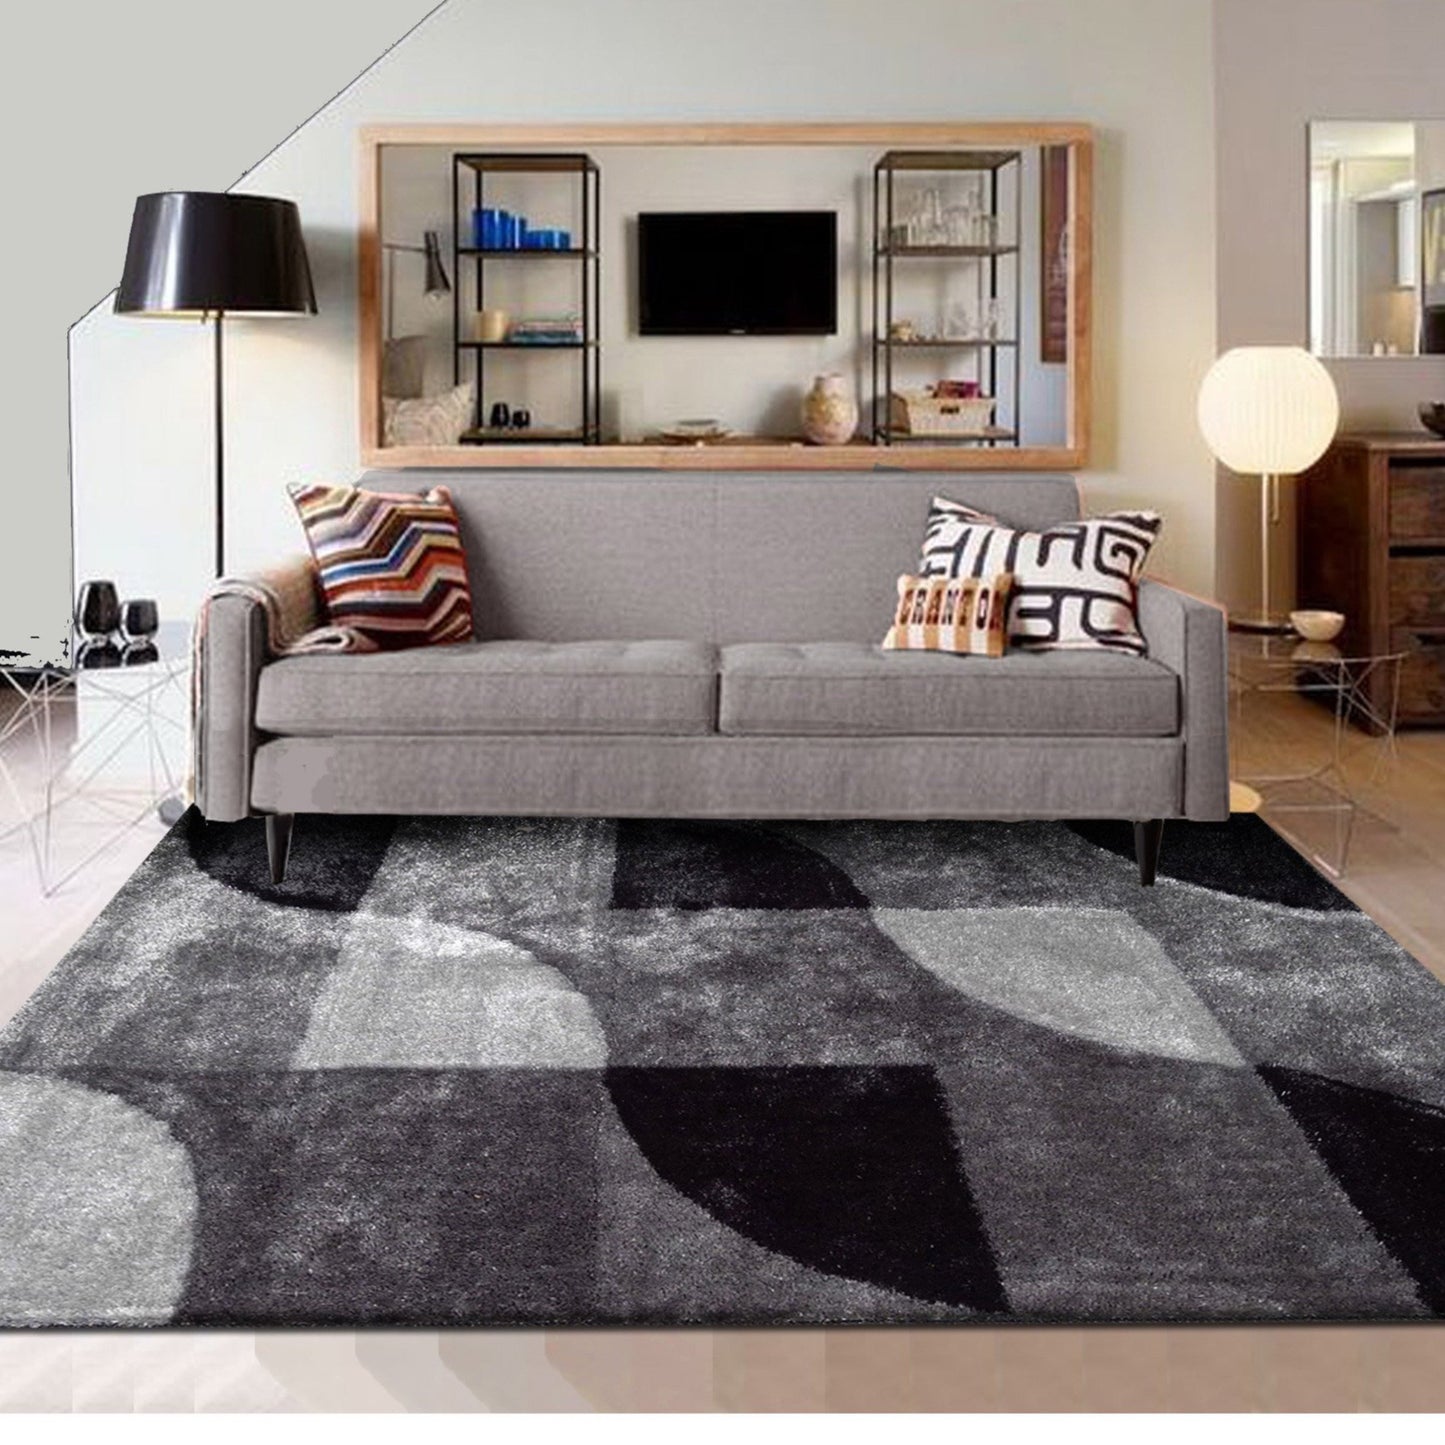 Vibrant Soft Cozy Geometric Design Shag Area Rug/Carpet Black gray